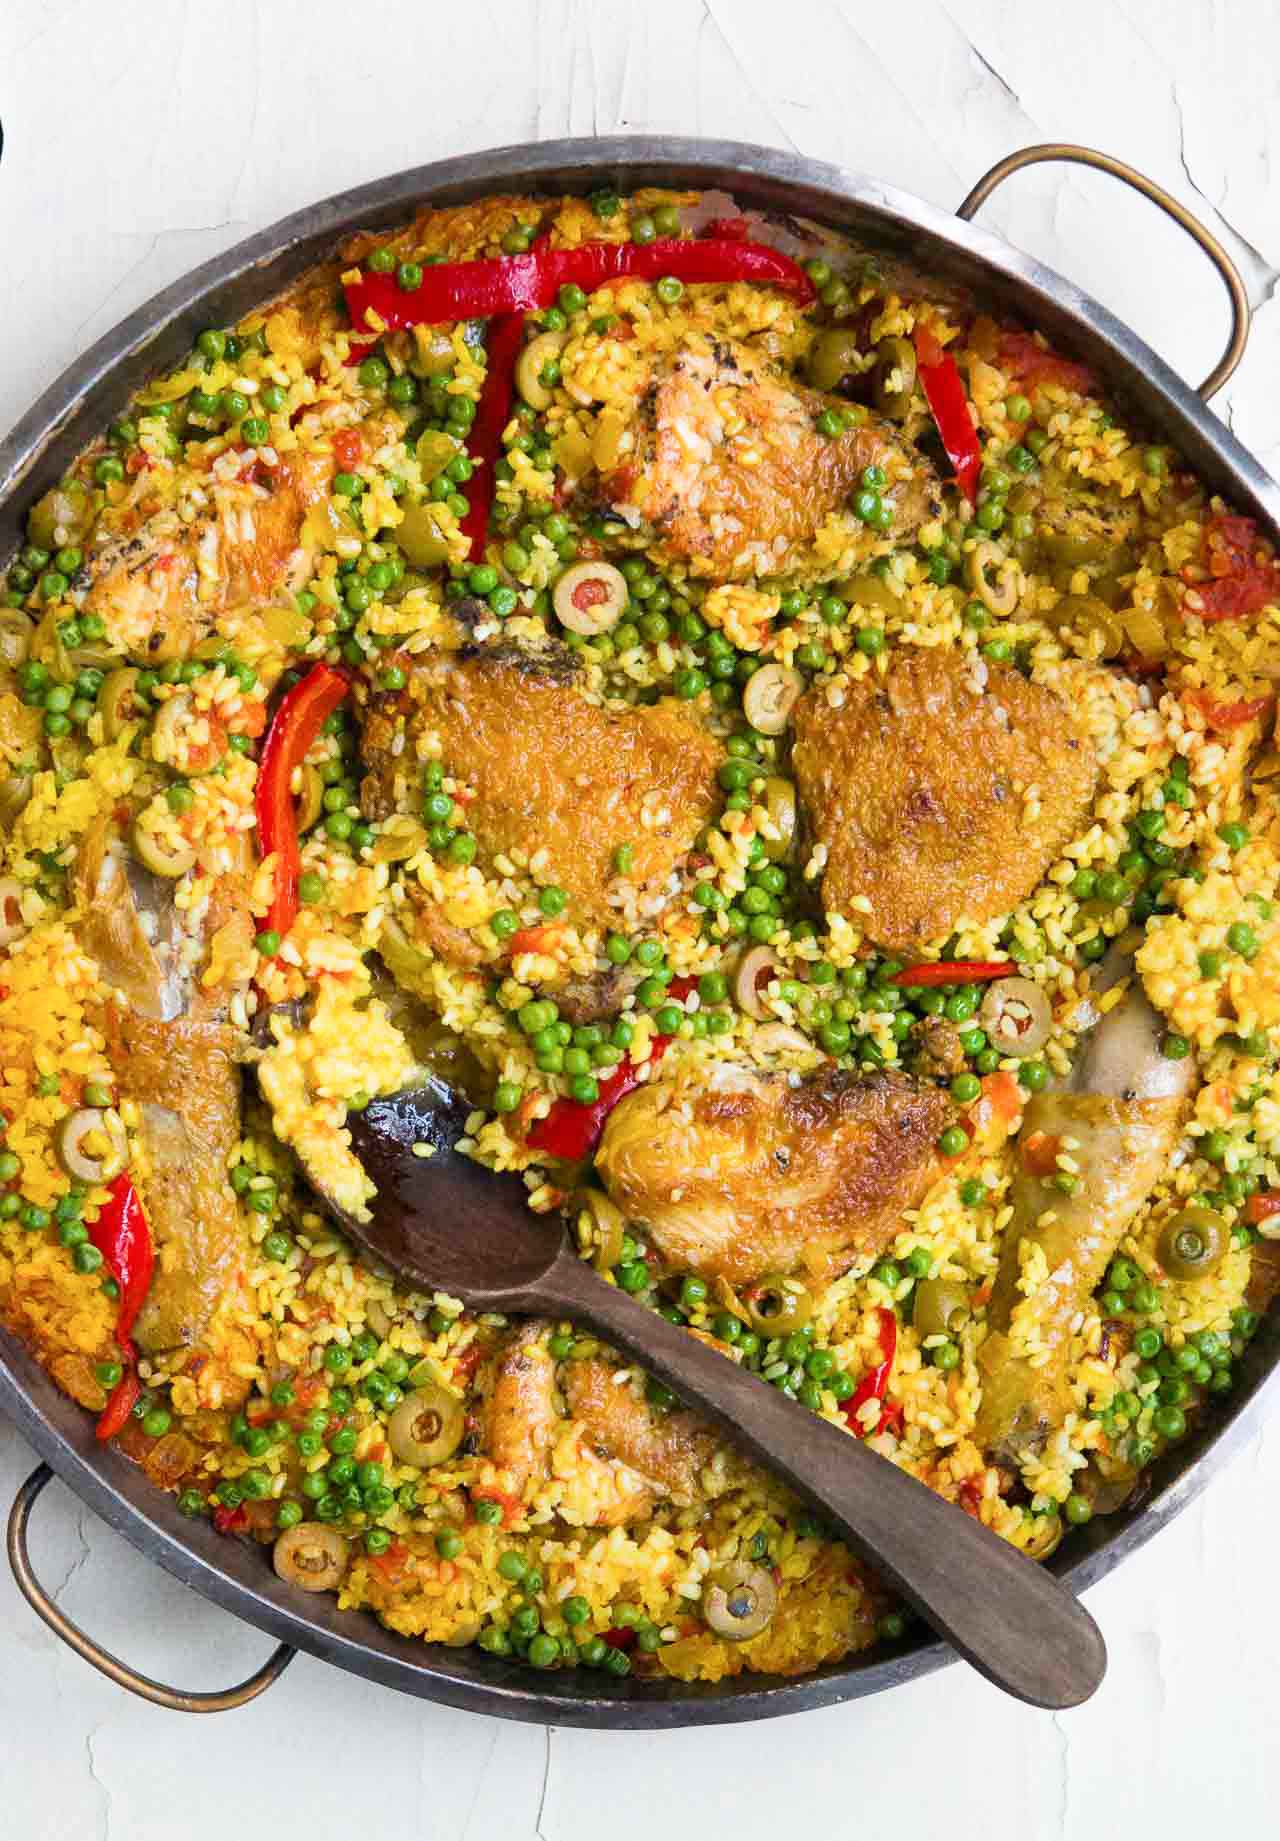 Arroz con pollo: Spanish Chicken with rice - David Lebovitz